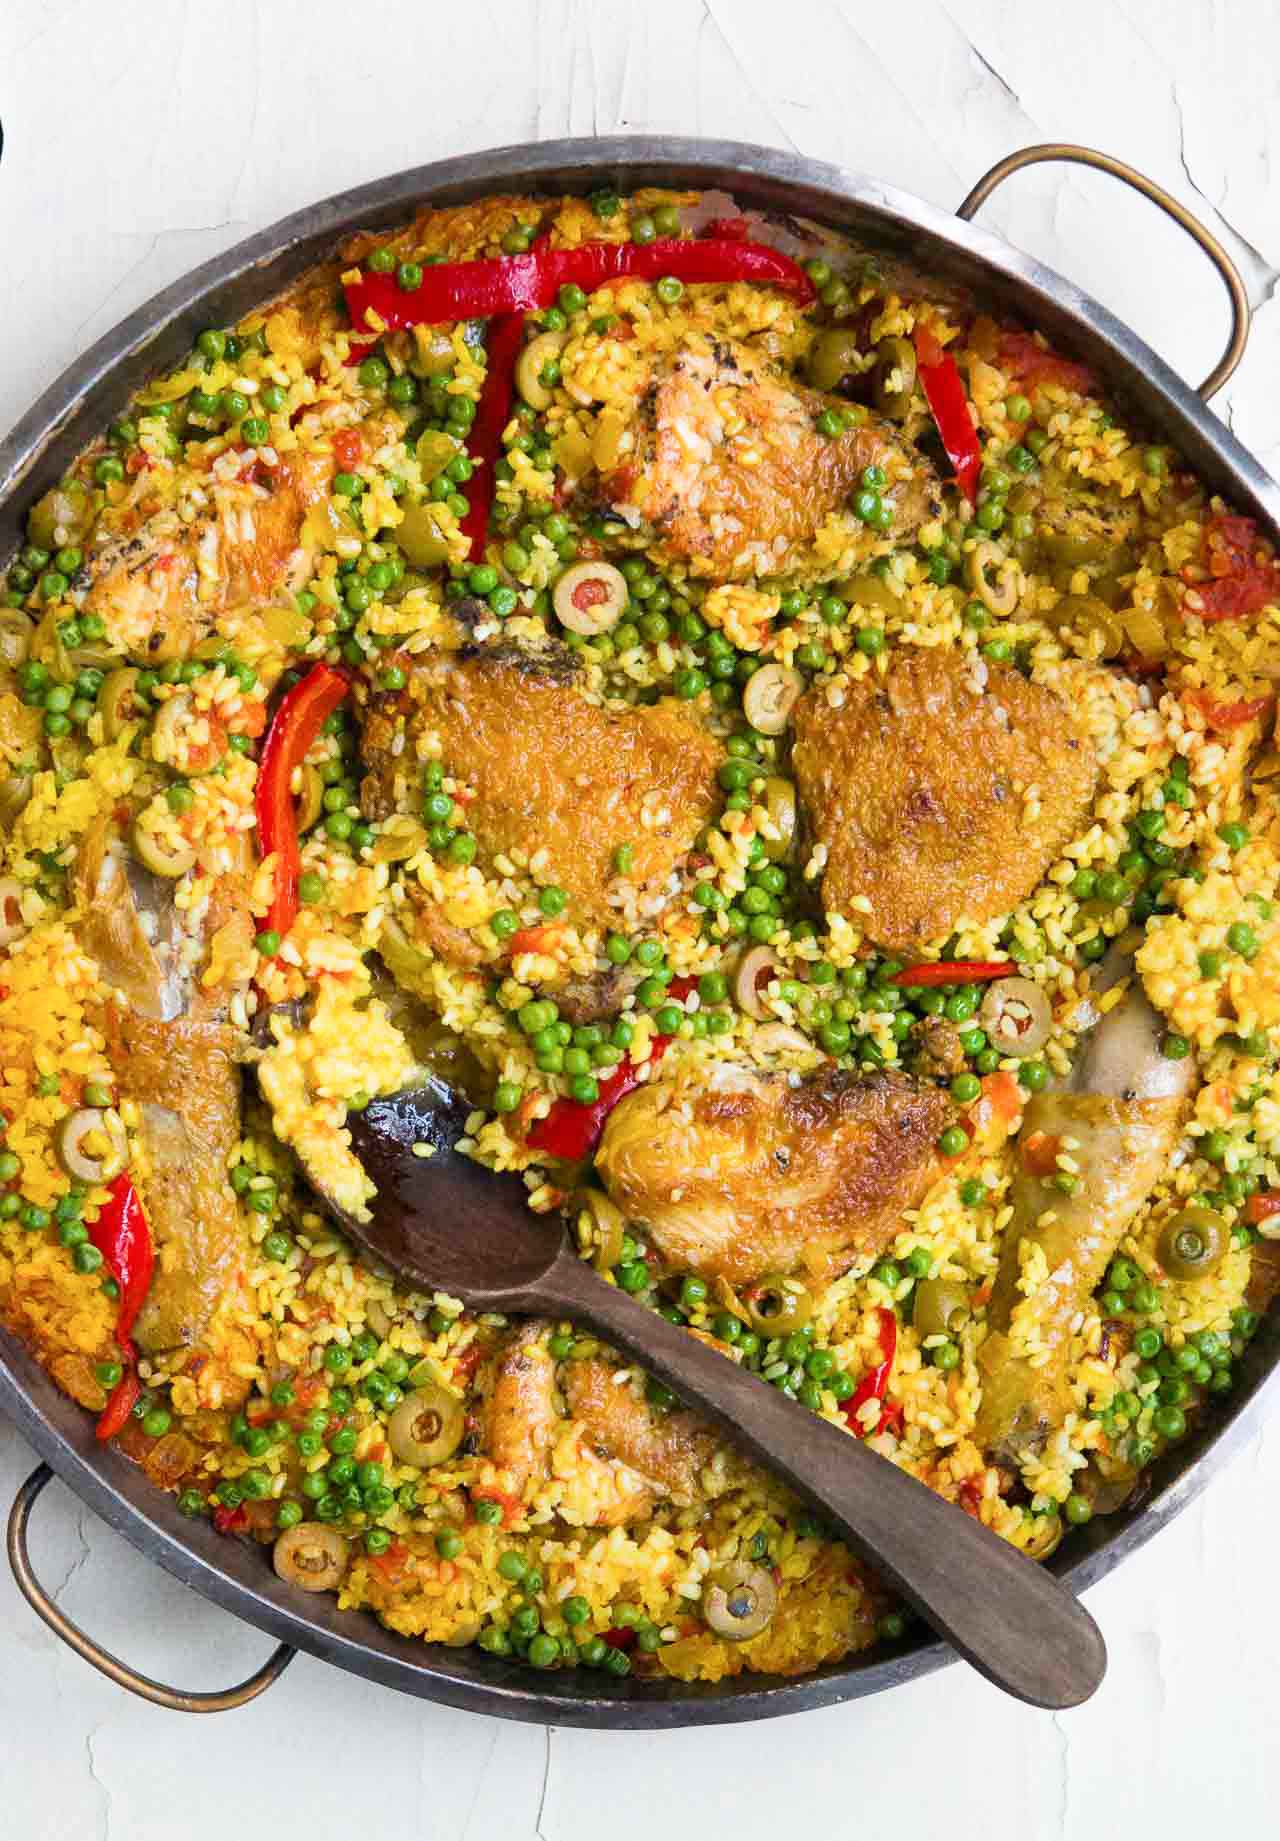 Arroz con pollo: Spanish Chicken with rice - David Lebovitz